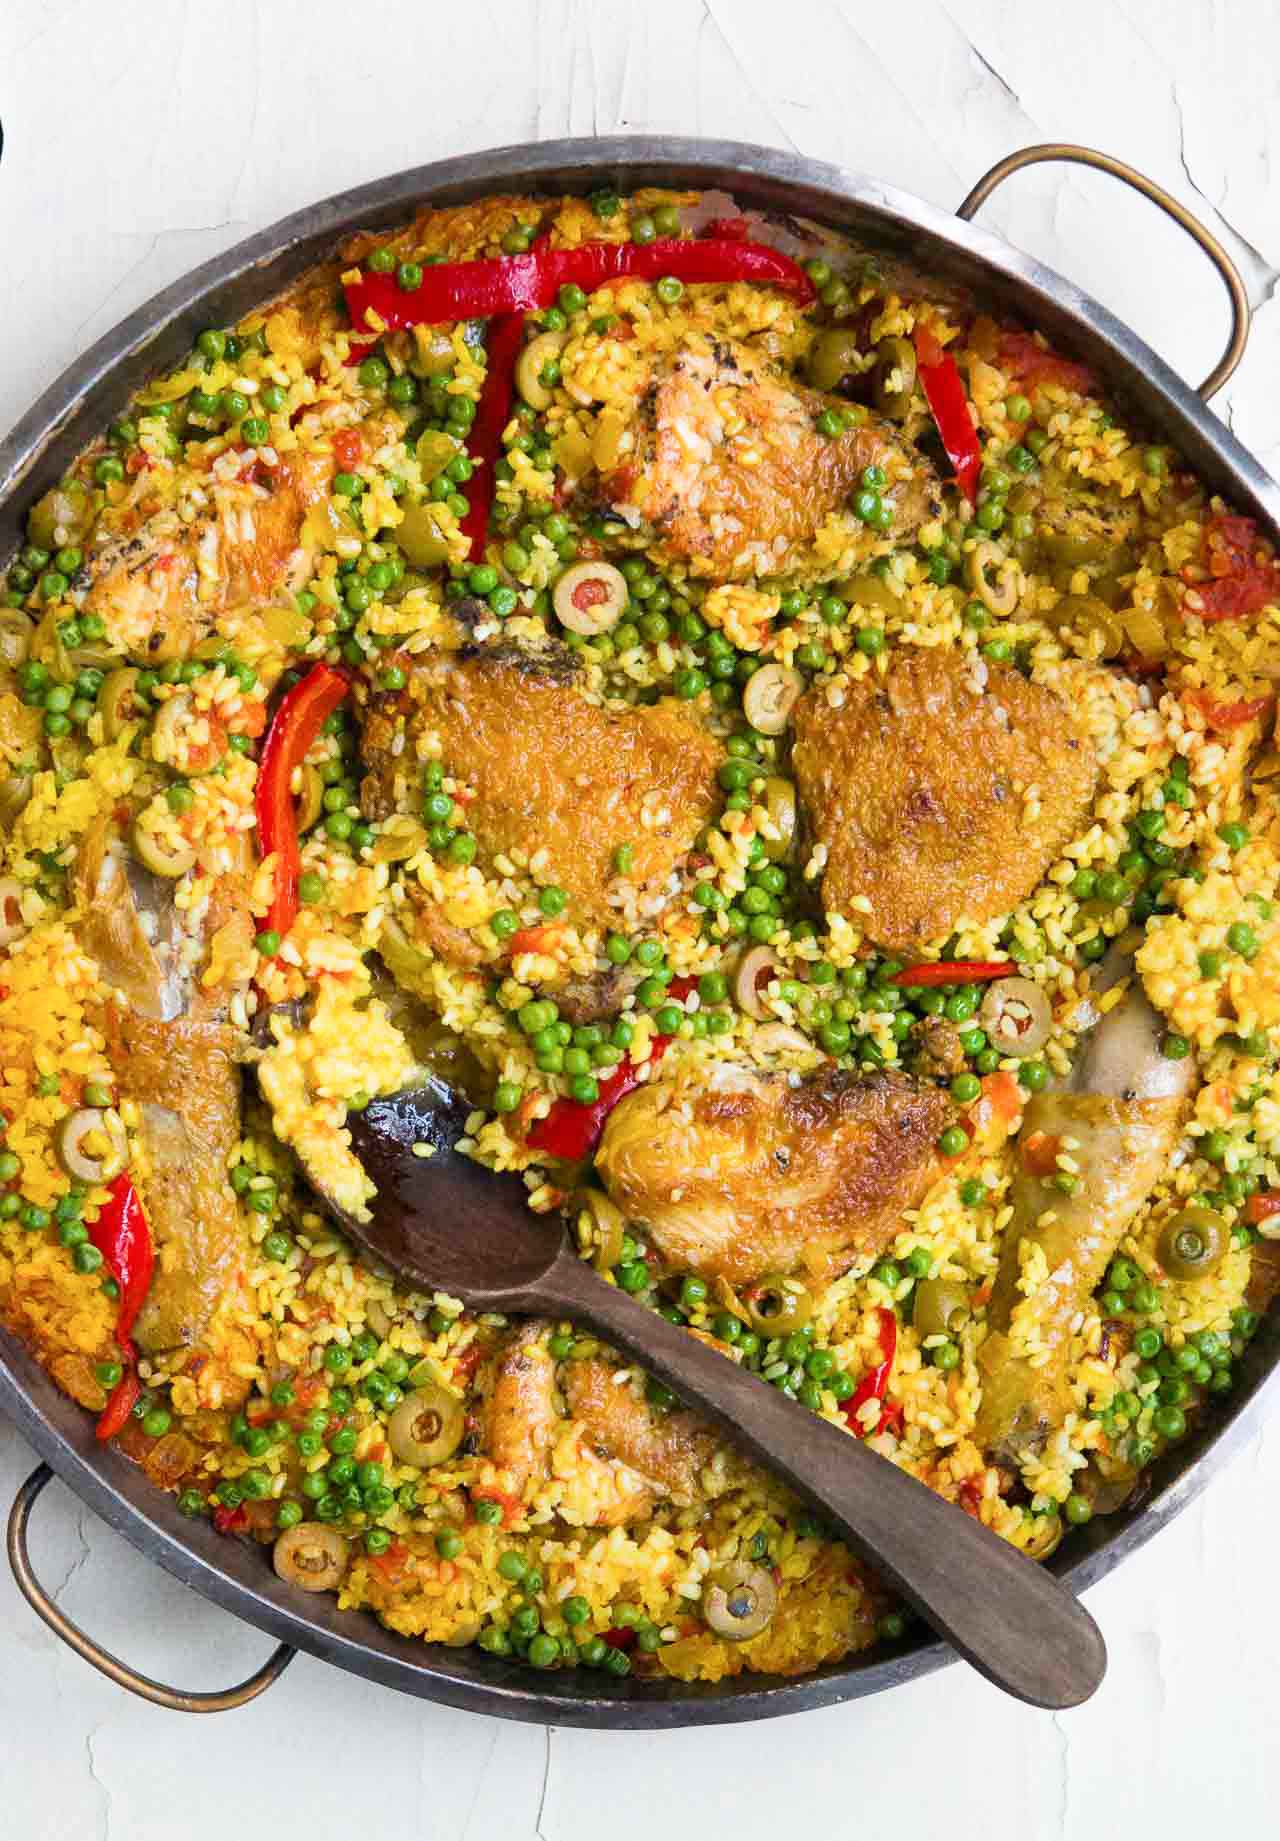 Arroz con pollo: Spanish Chicken with rice - David Lebovitz